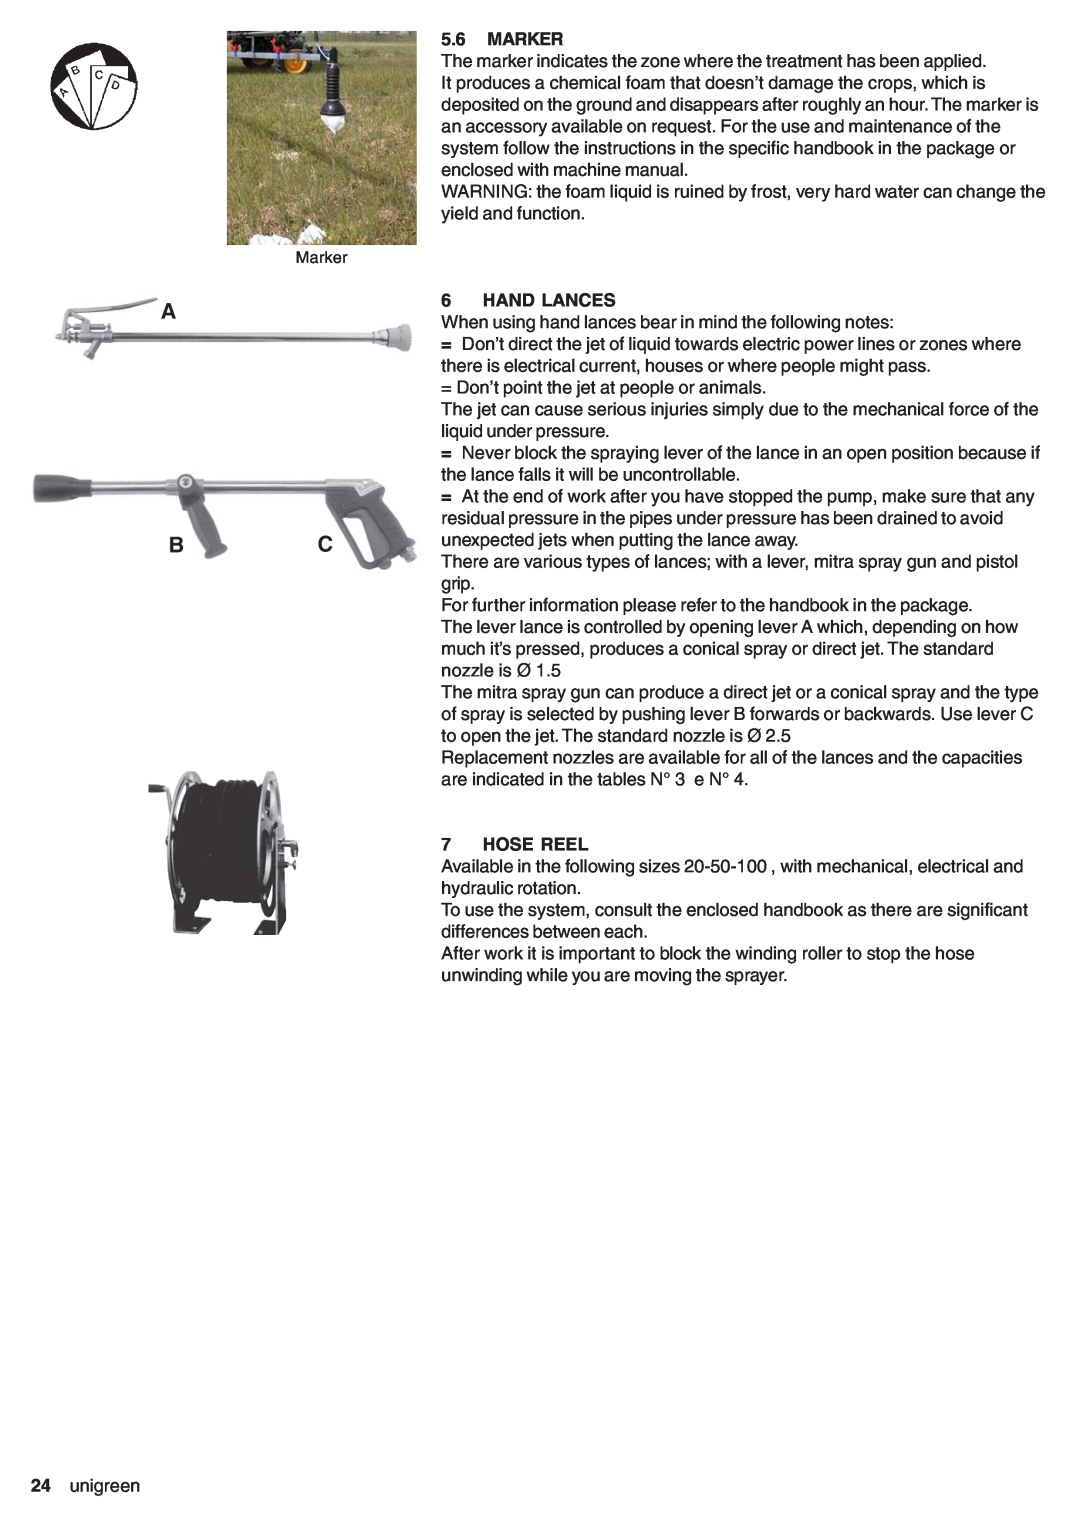 Unigreen DSP 11 - 16 - 22 - 32, CAMPO 11 - 16 - 22 - 32 manual A Bc, Marker, Hand Lances, Hose Reel 